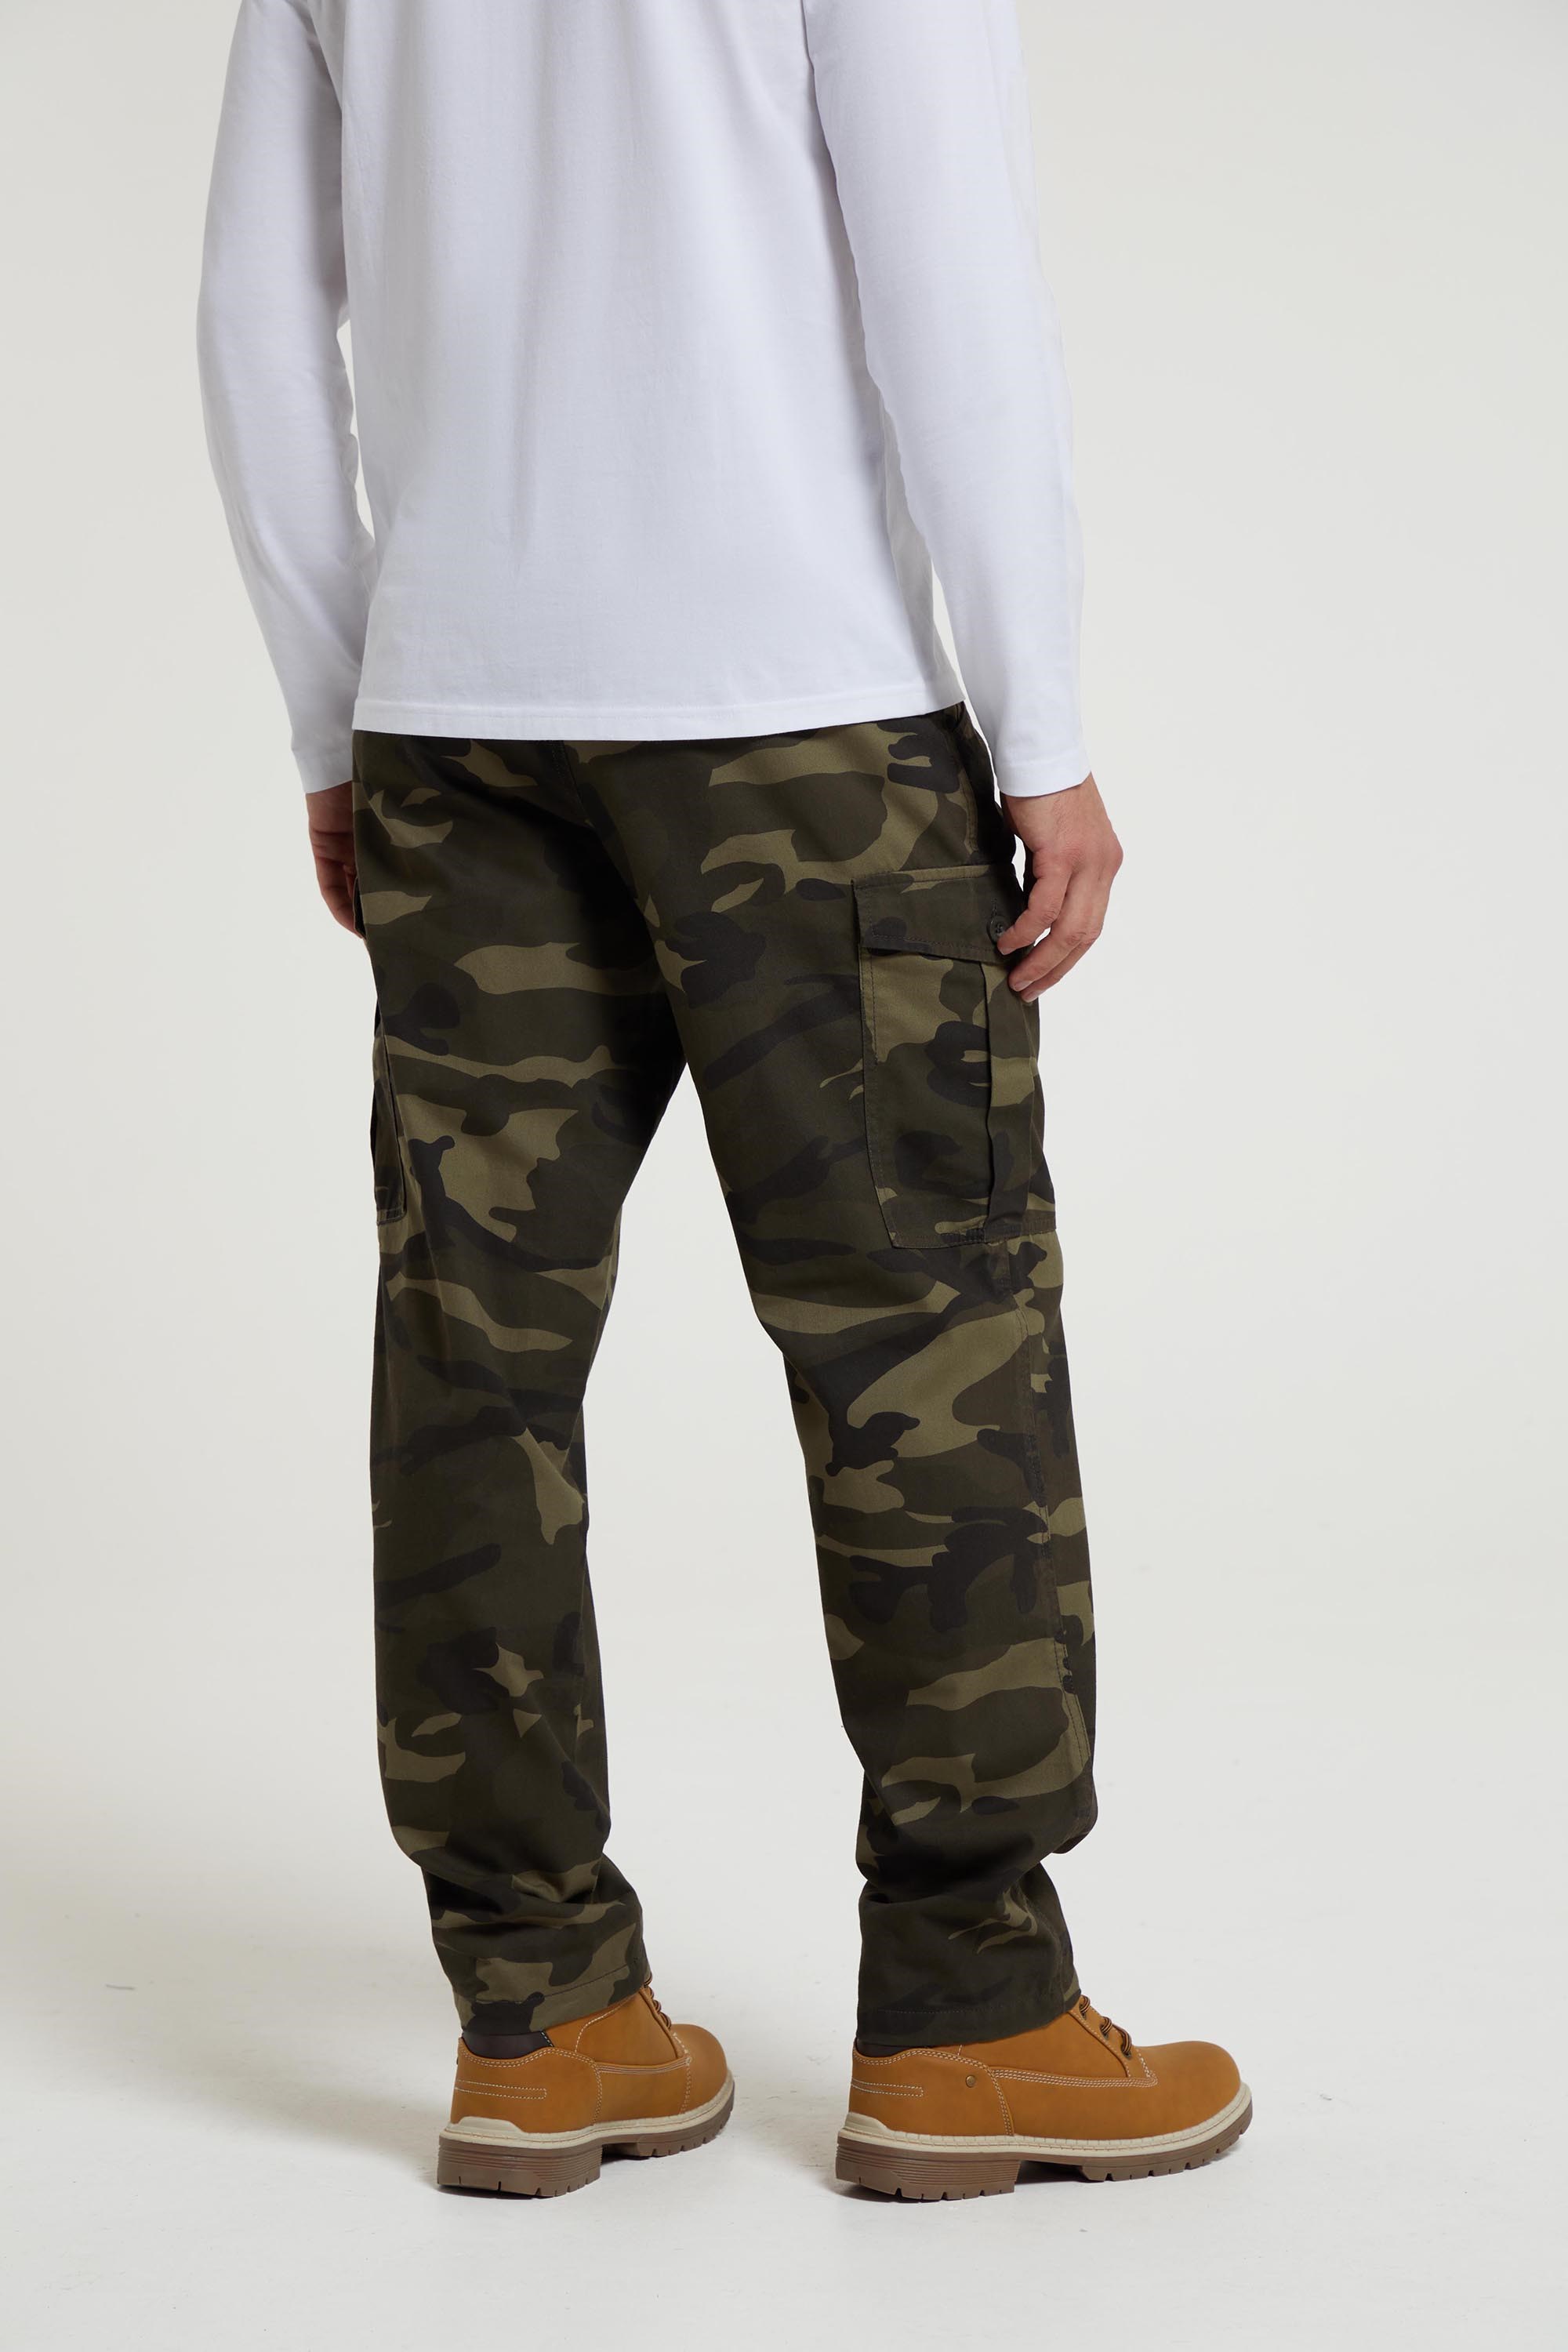 Mens Cargo Camo Pants Multi Pocket Lightweight Army Regular Fit